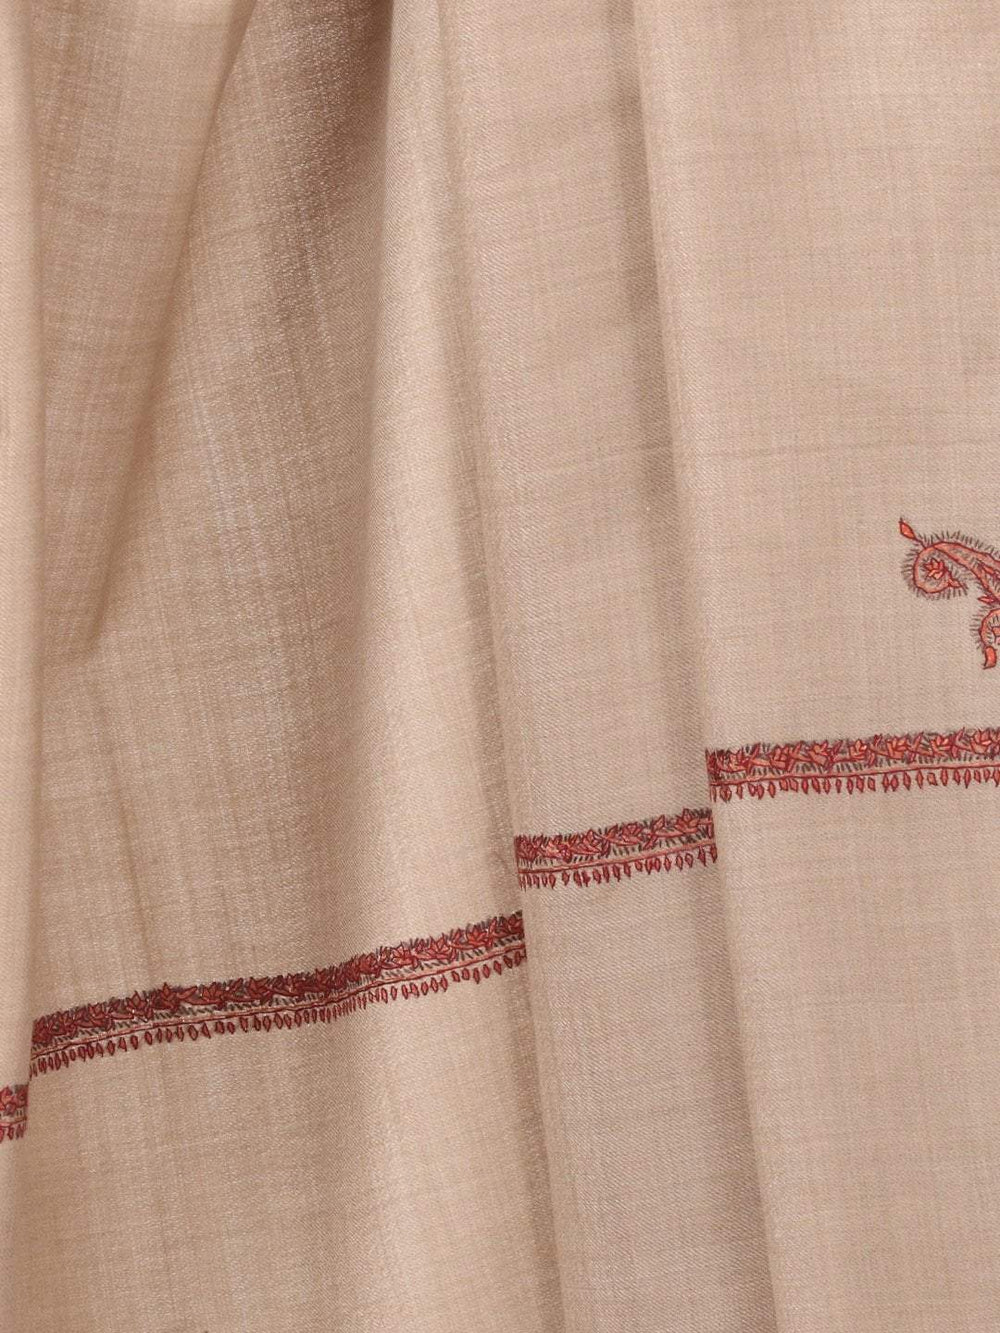 Pashtush India 127x254 Pashtush Mens Hand Embroidery Shawl, Woollen Shawl with Kashmiri Kingri Design Embroidery Full Size (Beige)